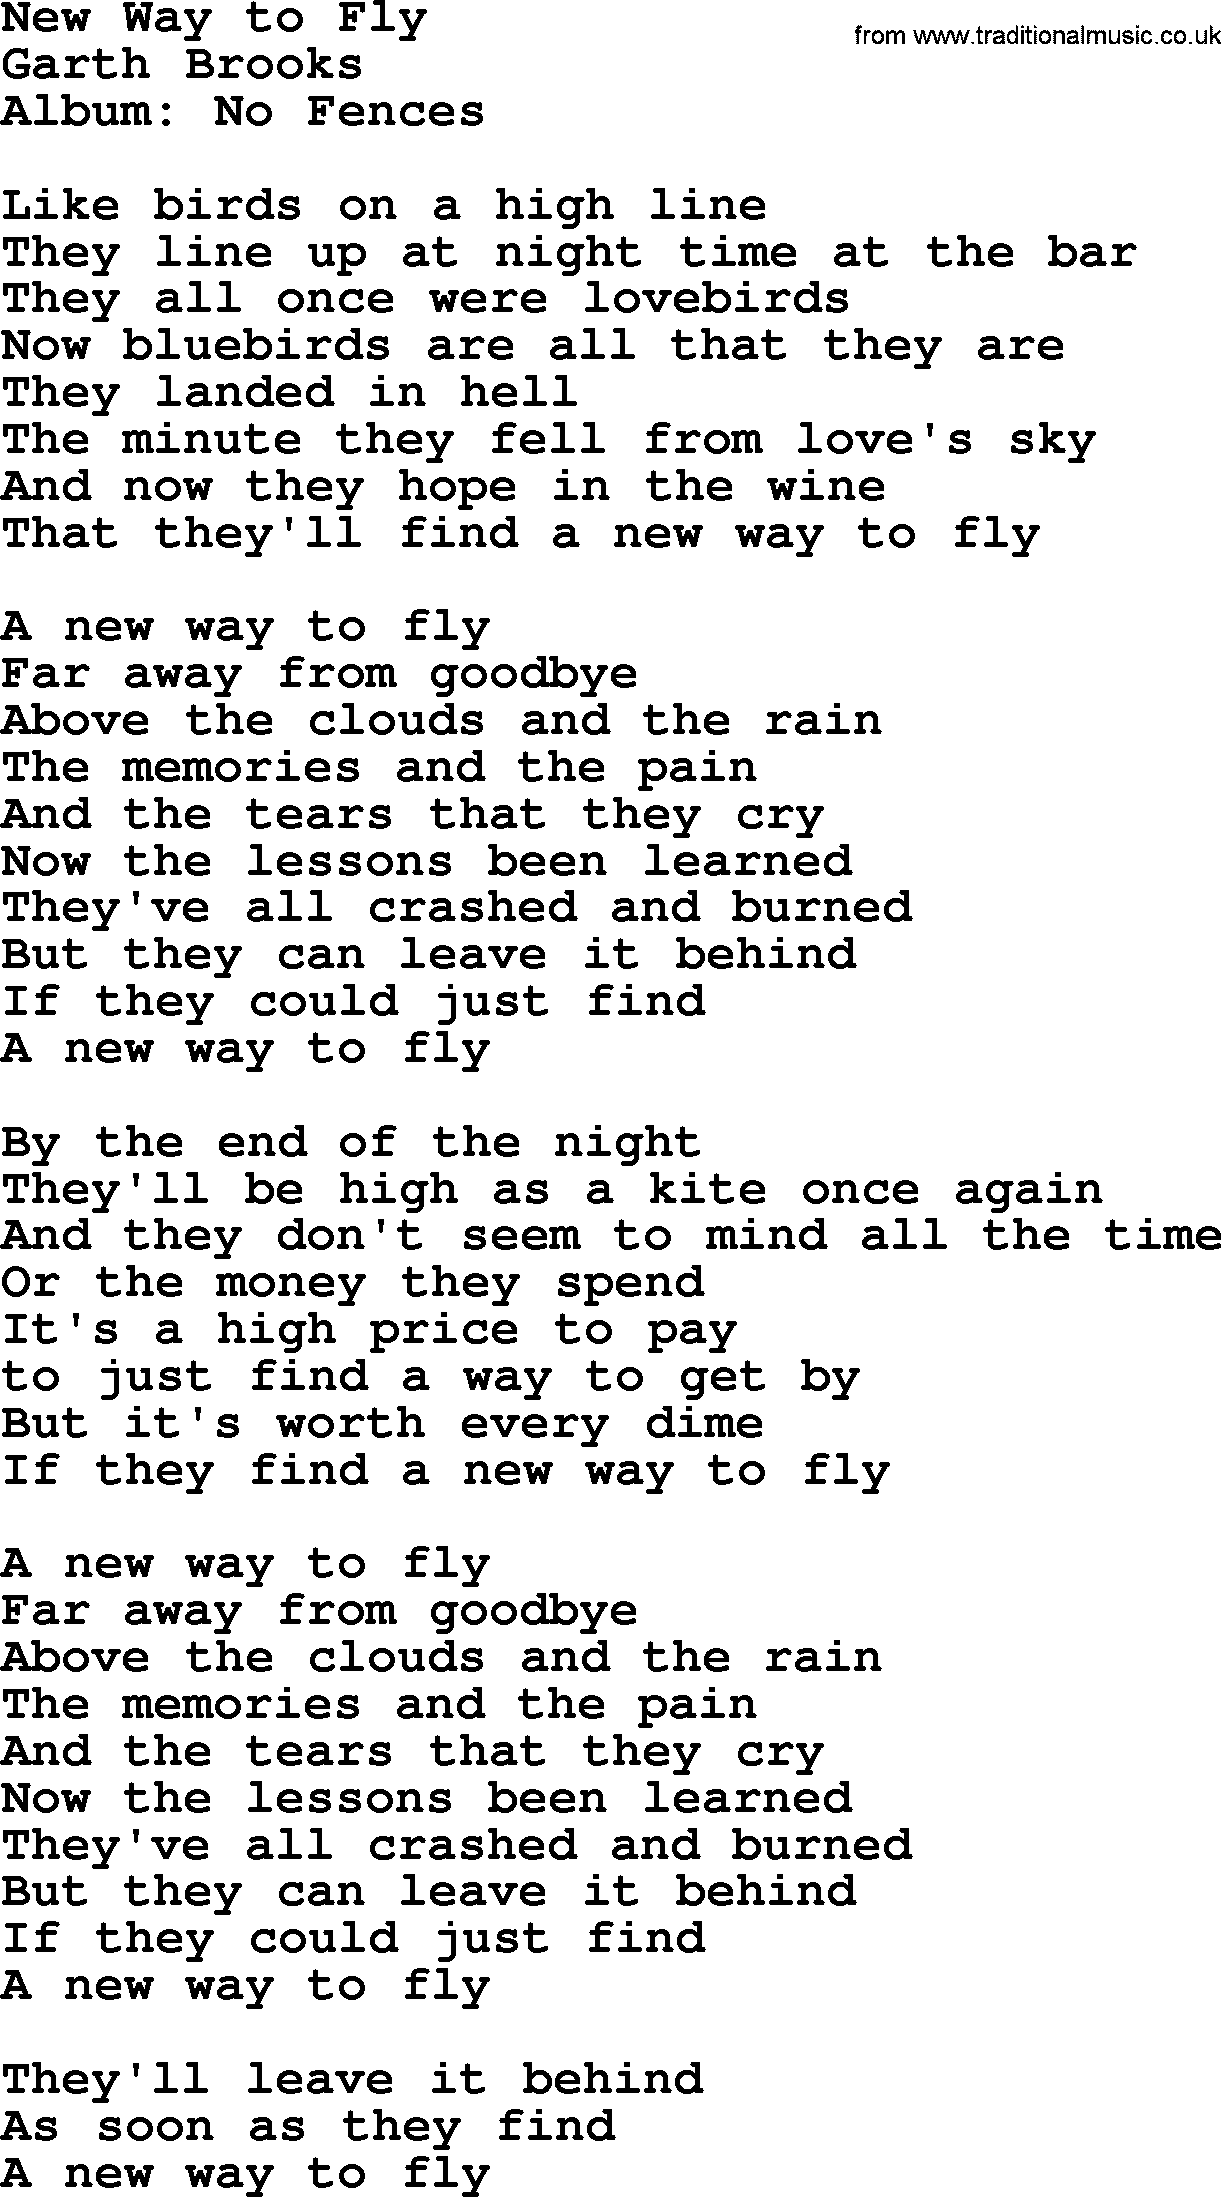 Garth Brooks song: New Way To Fly, lyrics